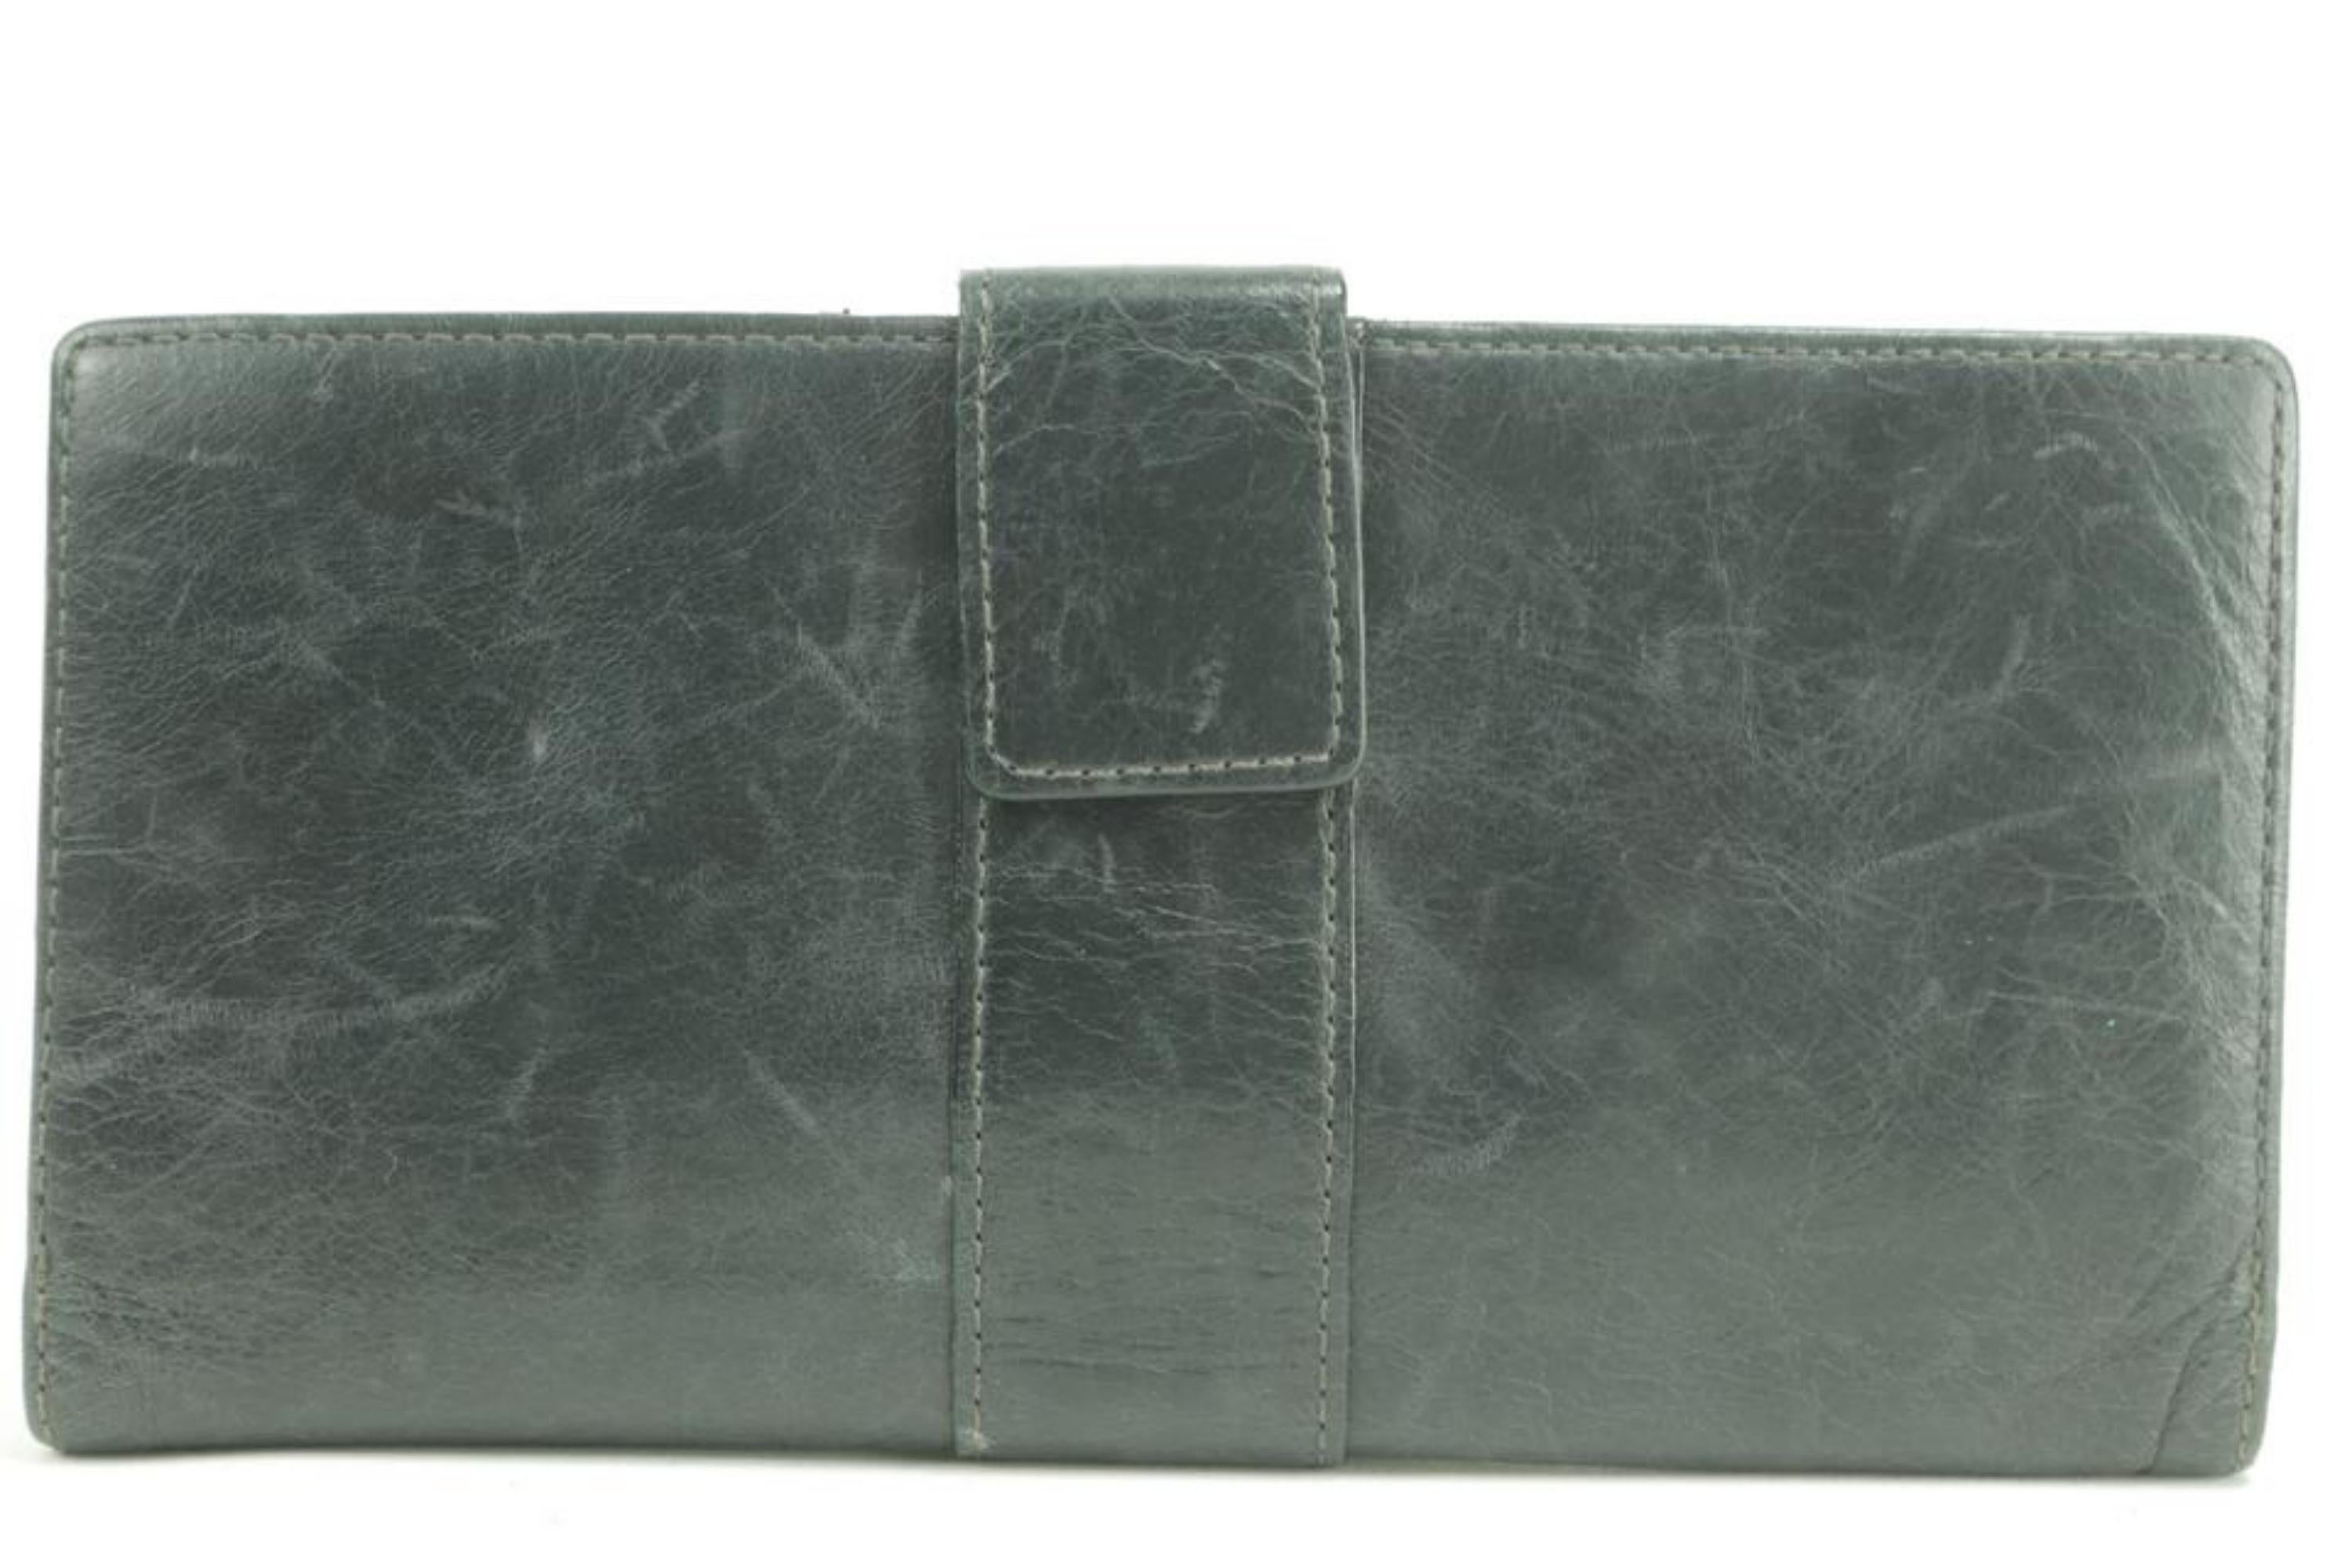 Paul Smith Belt Long Flap Wallet Black Leather Bifold 0M46 For Sale 2